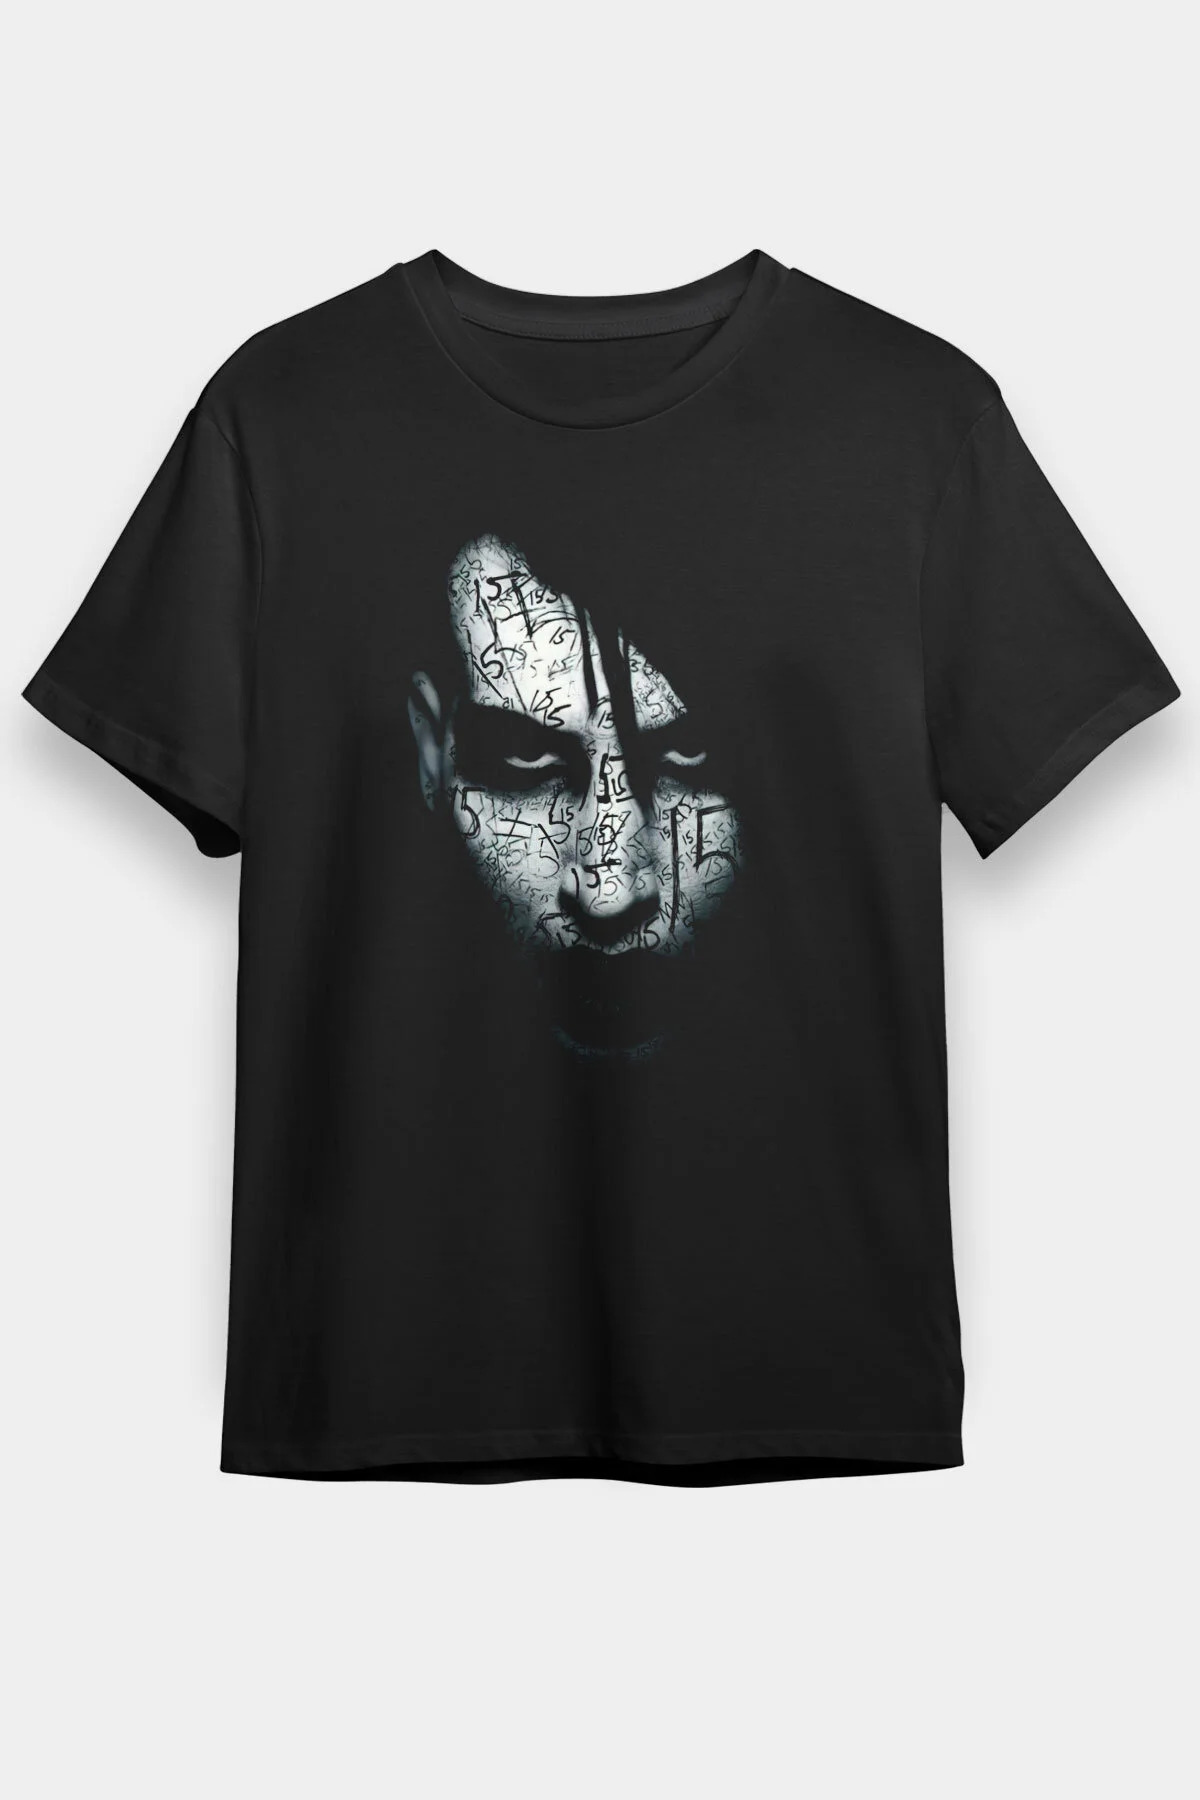 Marilyn Manson T shirt, Music Band ,Unisex Tshirt 10/